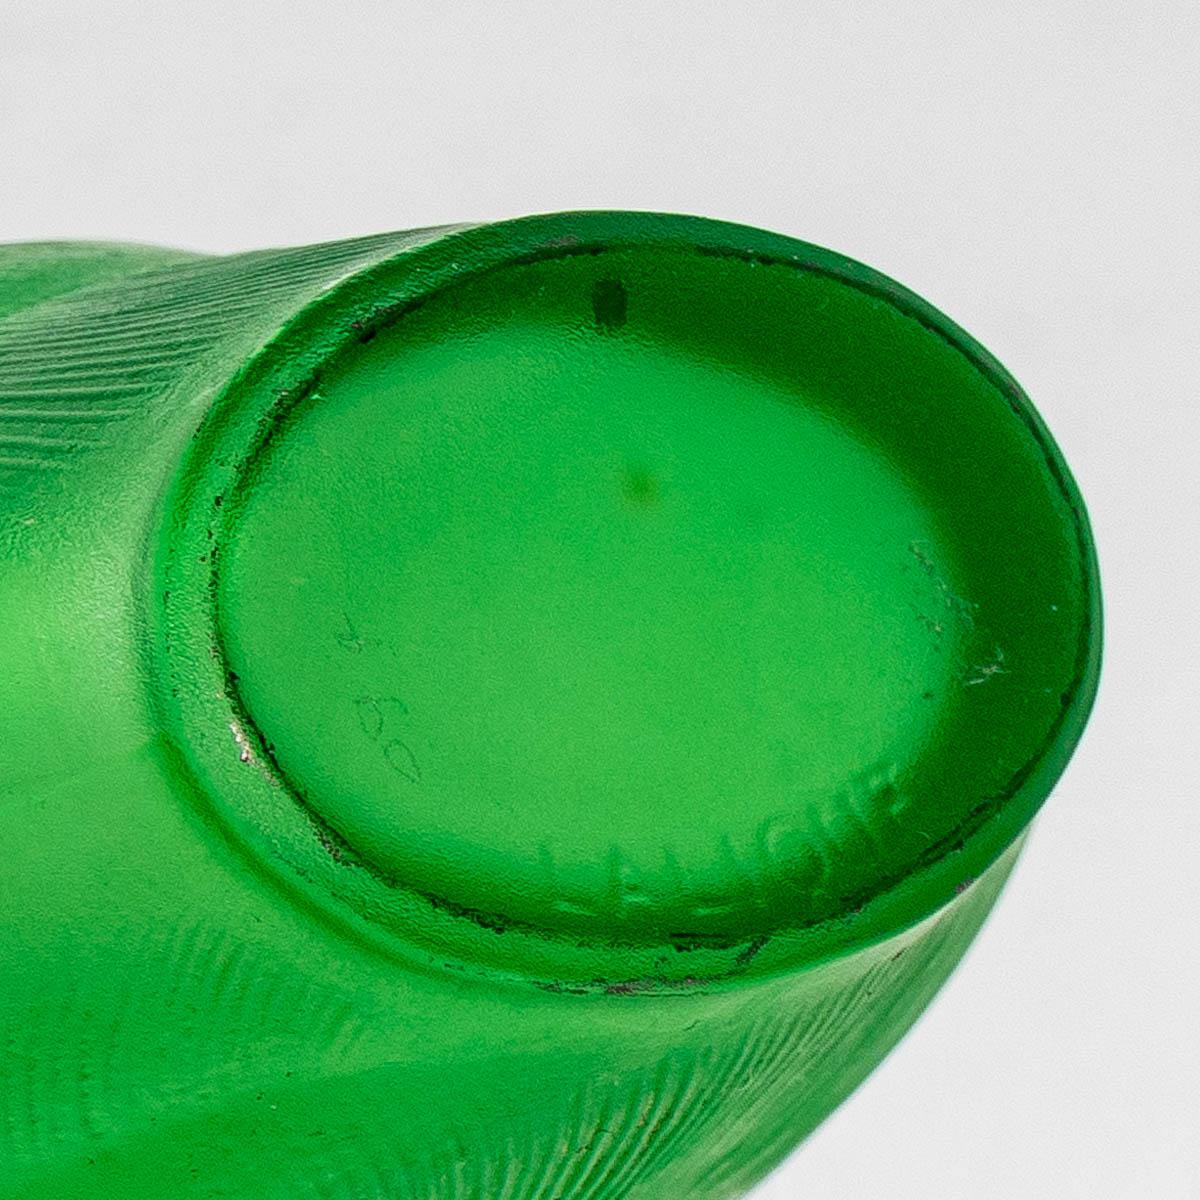 Molded 1920 René Lalique Amphitrite Perfume Bottle Emerald Green Glass